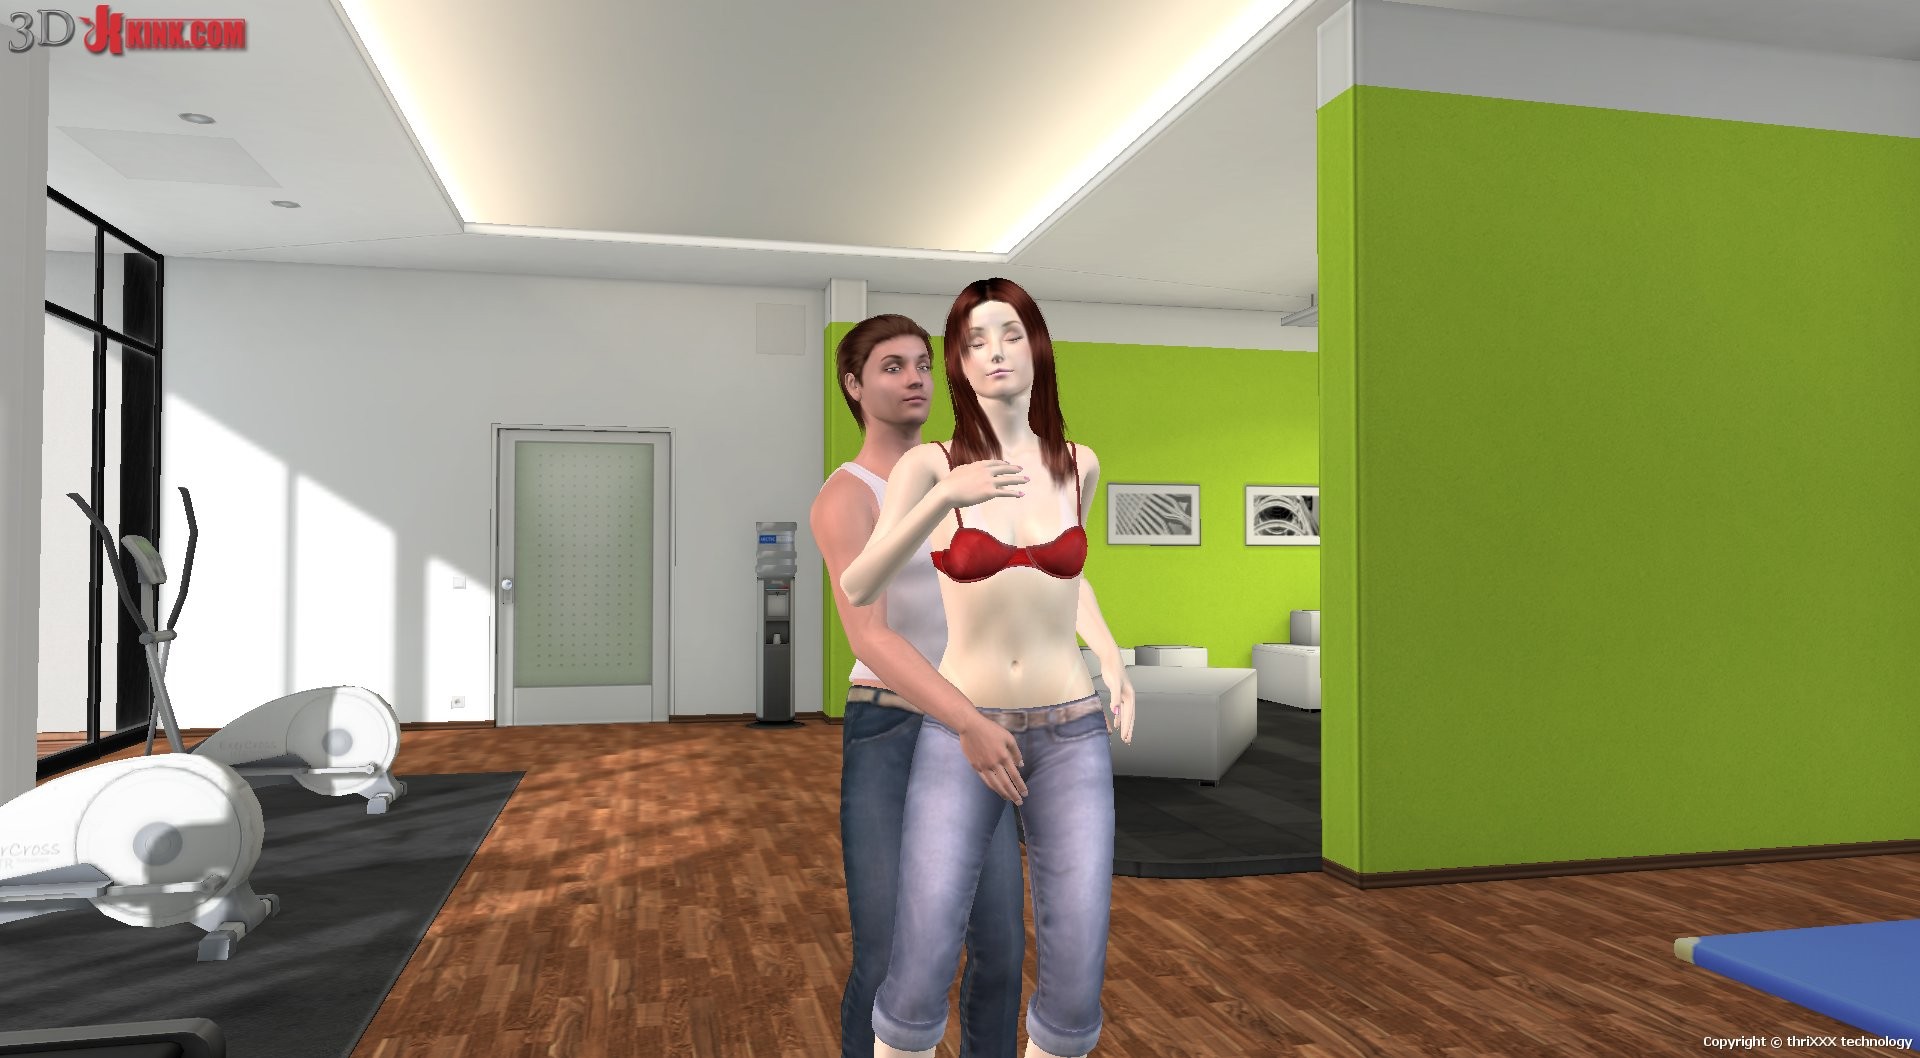 ¡Caliente acción de sexo bdsm creado en el juego de sexo virtual fetiche 3d!
 #69357131